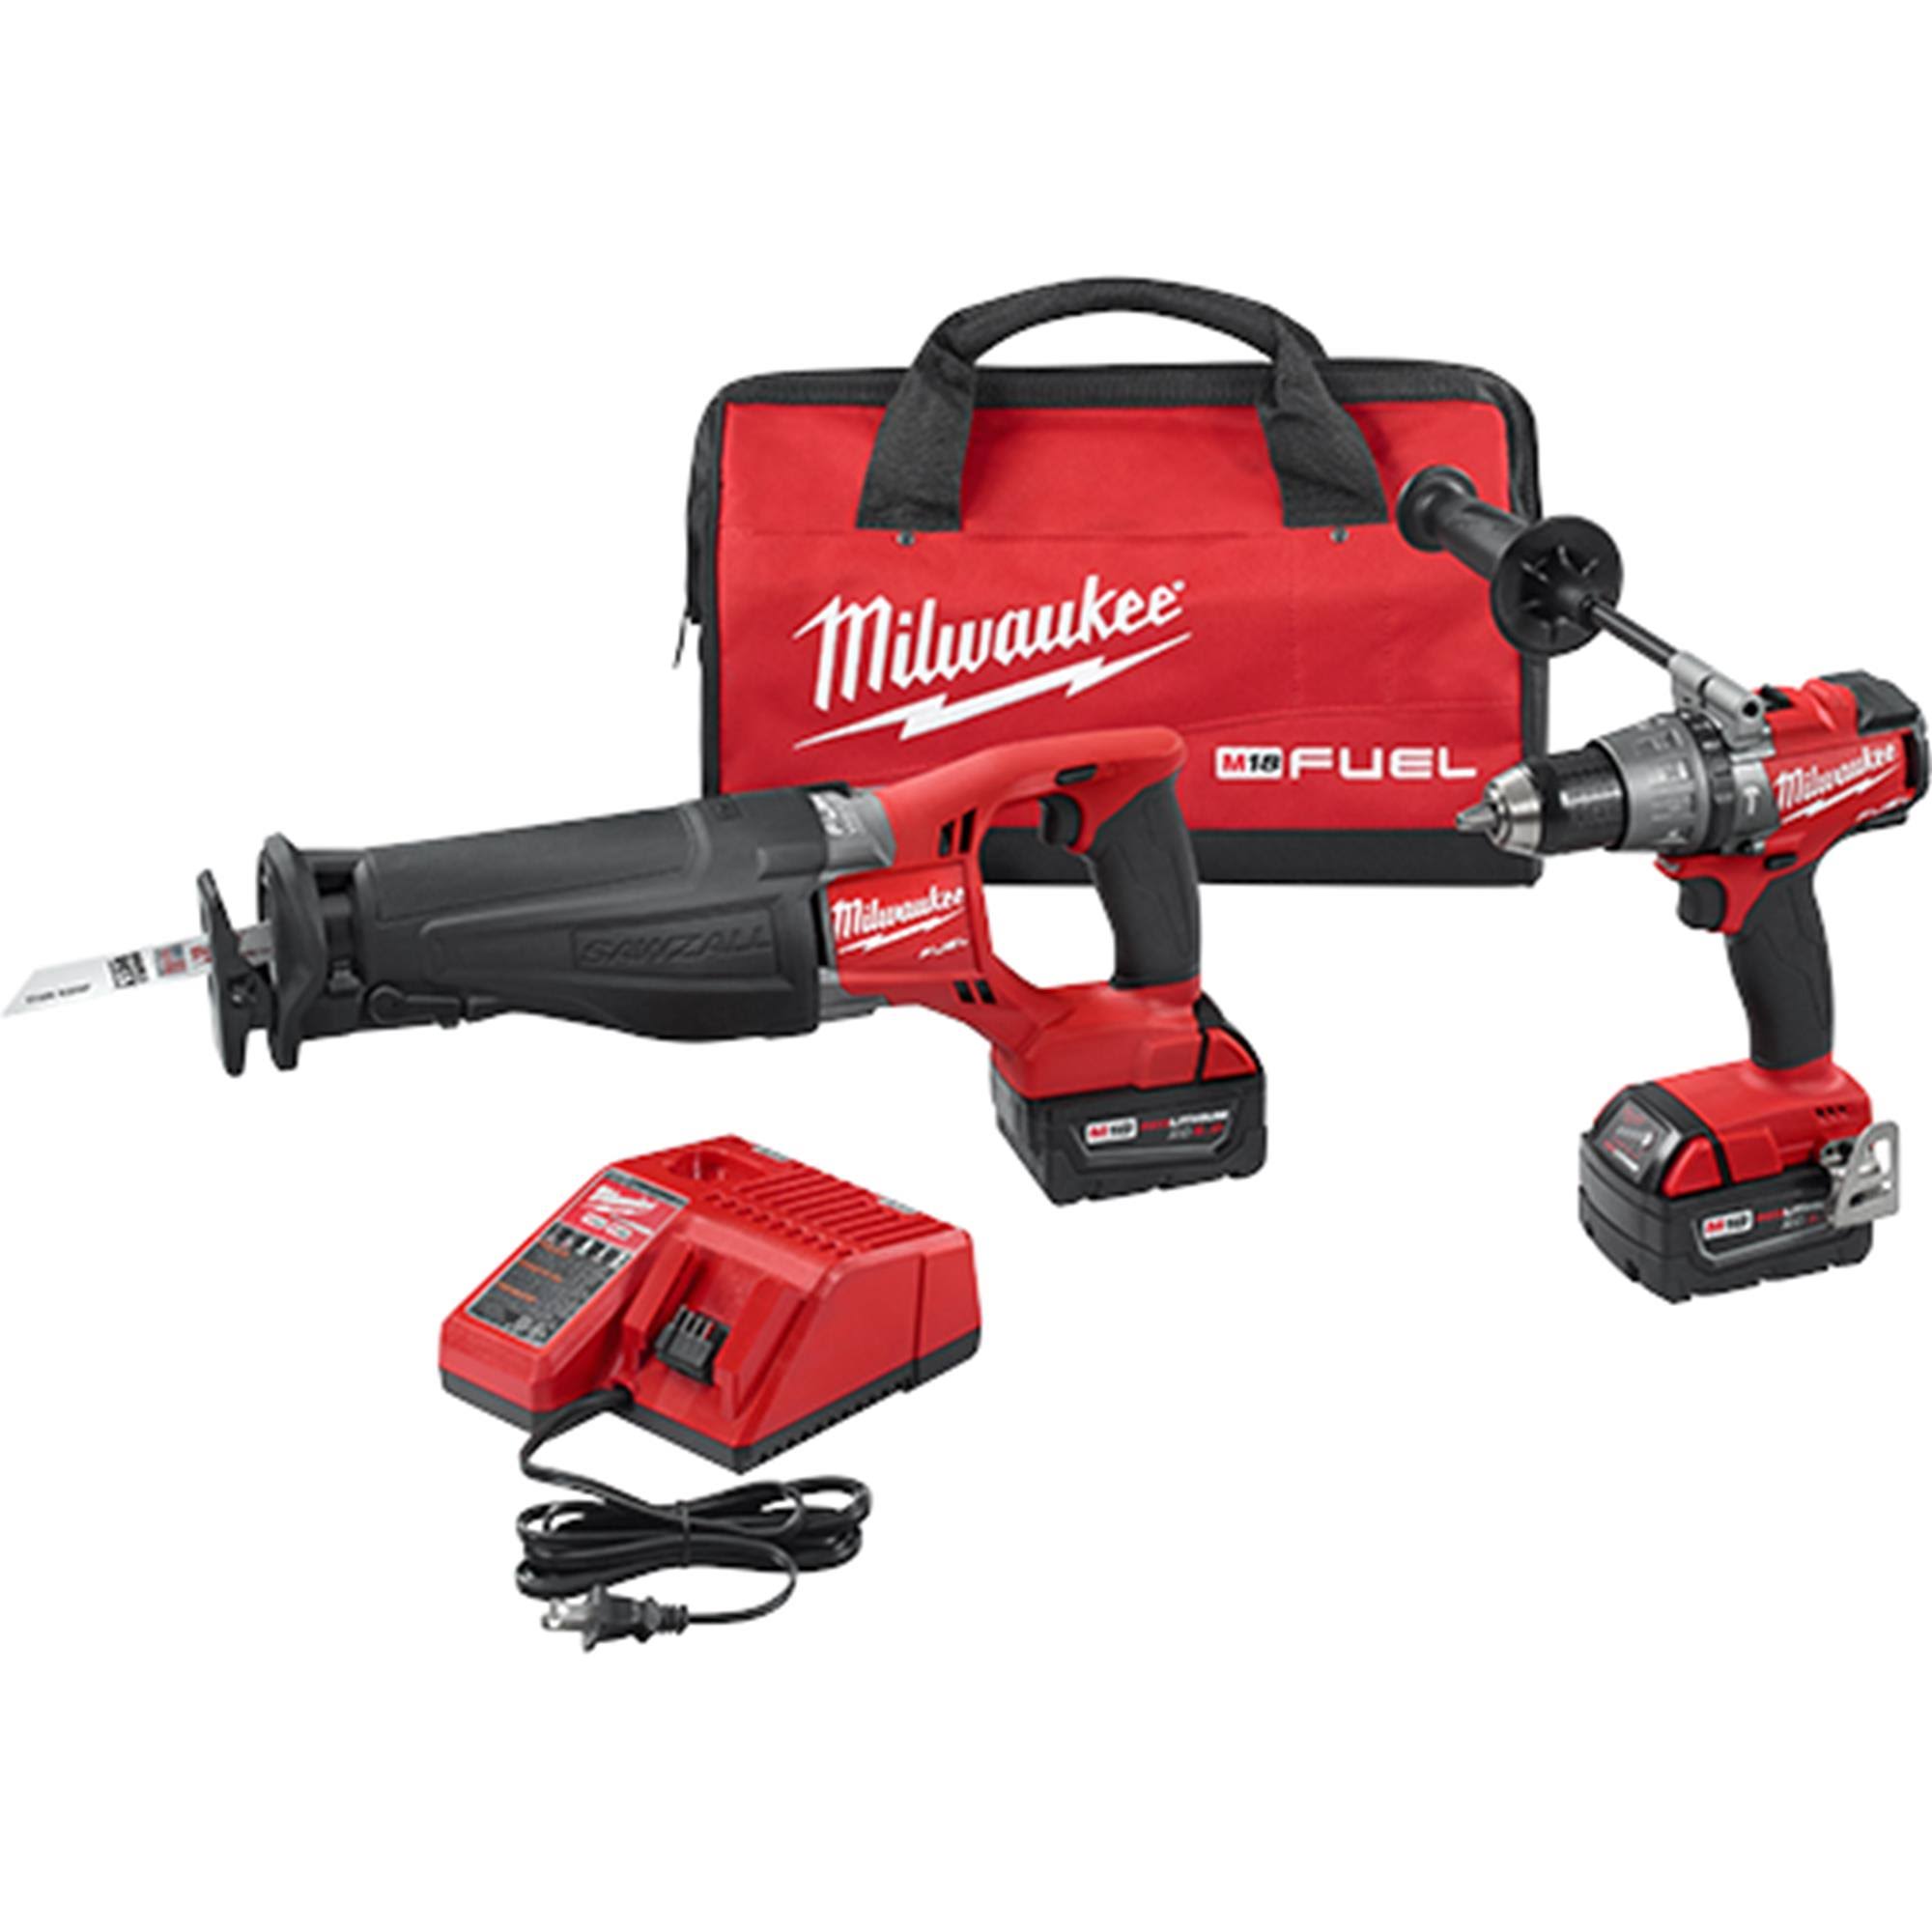 Milwaukee 2894-22 M18 Fuel Cordless 2-Tool Combo Kit